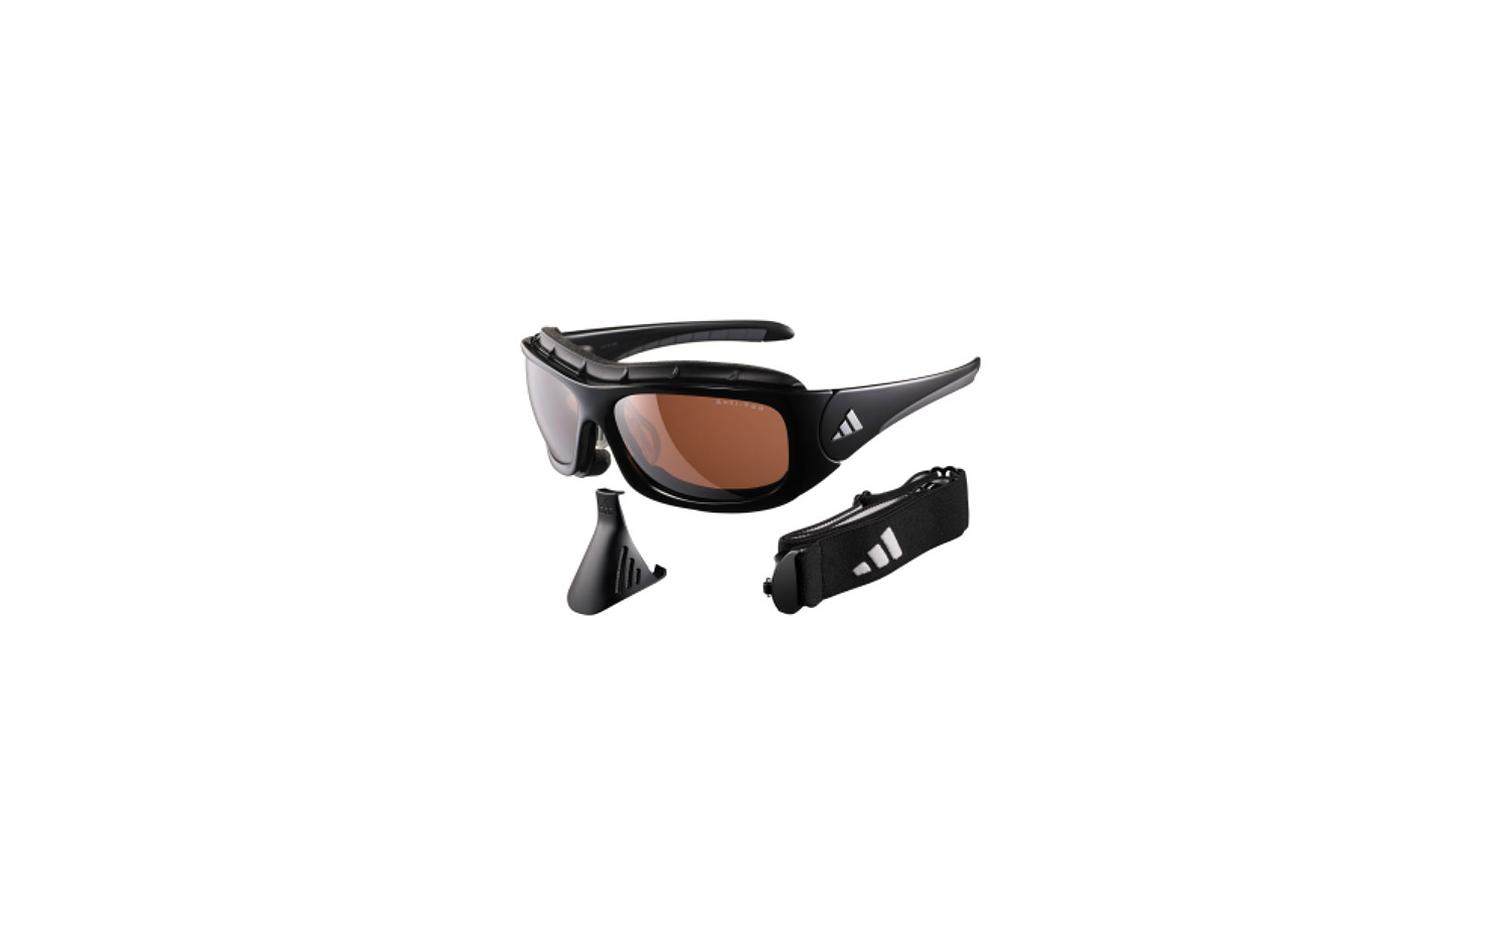 Posdata suspicaz soborno Adidas Terrex Pro A143 6050 Sunglasses | Shade Station